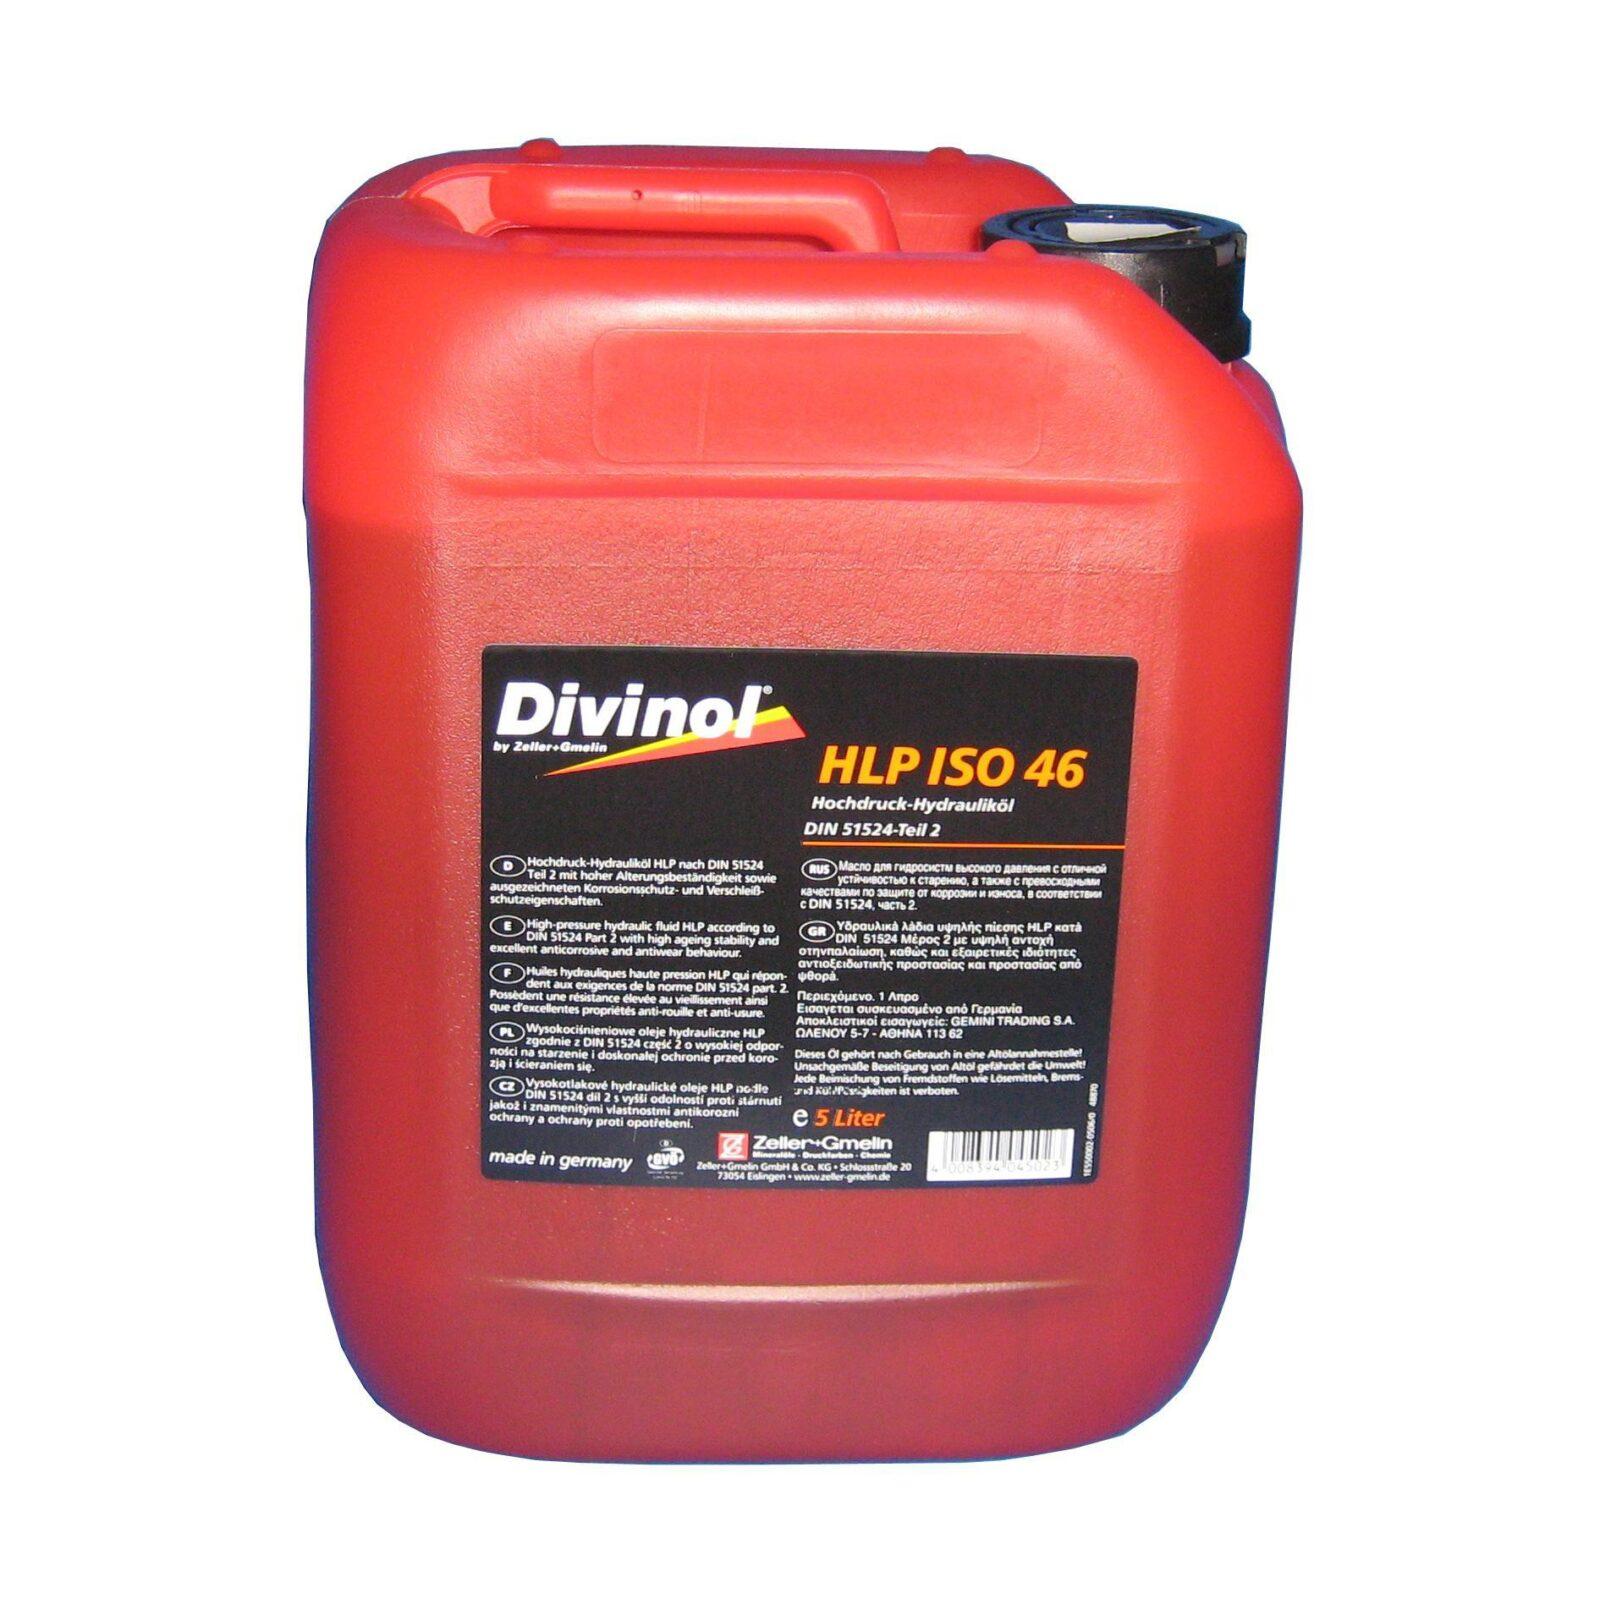 Масло hydraulic hlp 46. Гидравлическое масло Hydro HLP 46. ISO 46 масло гидравлическое. Масло гидравлическое HLP 46 красное. Масло HLP-46 (20 Л).